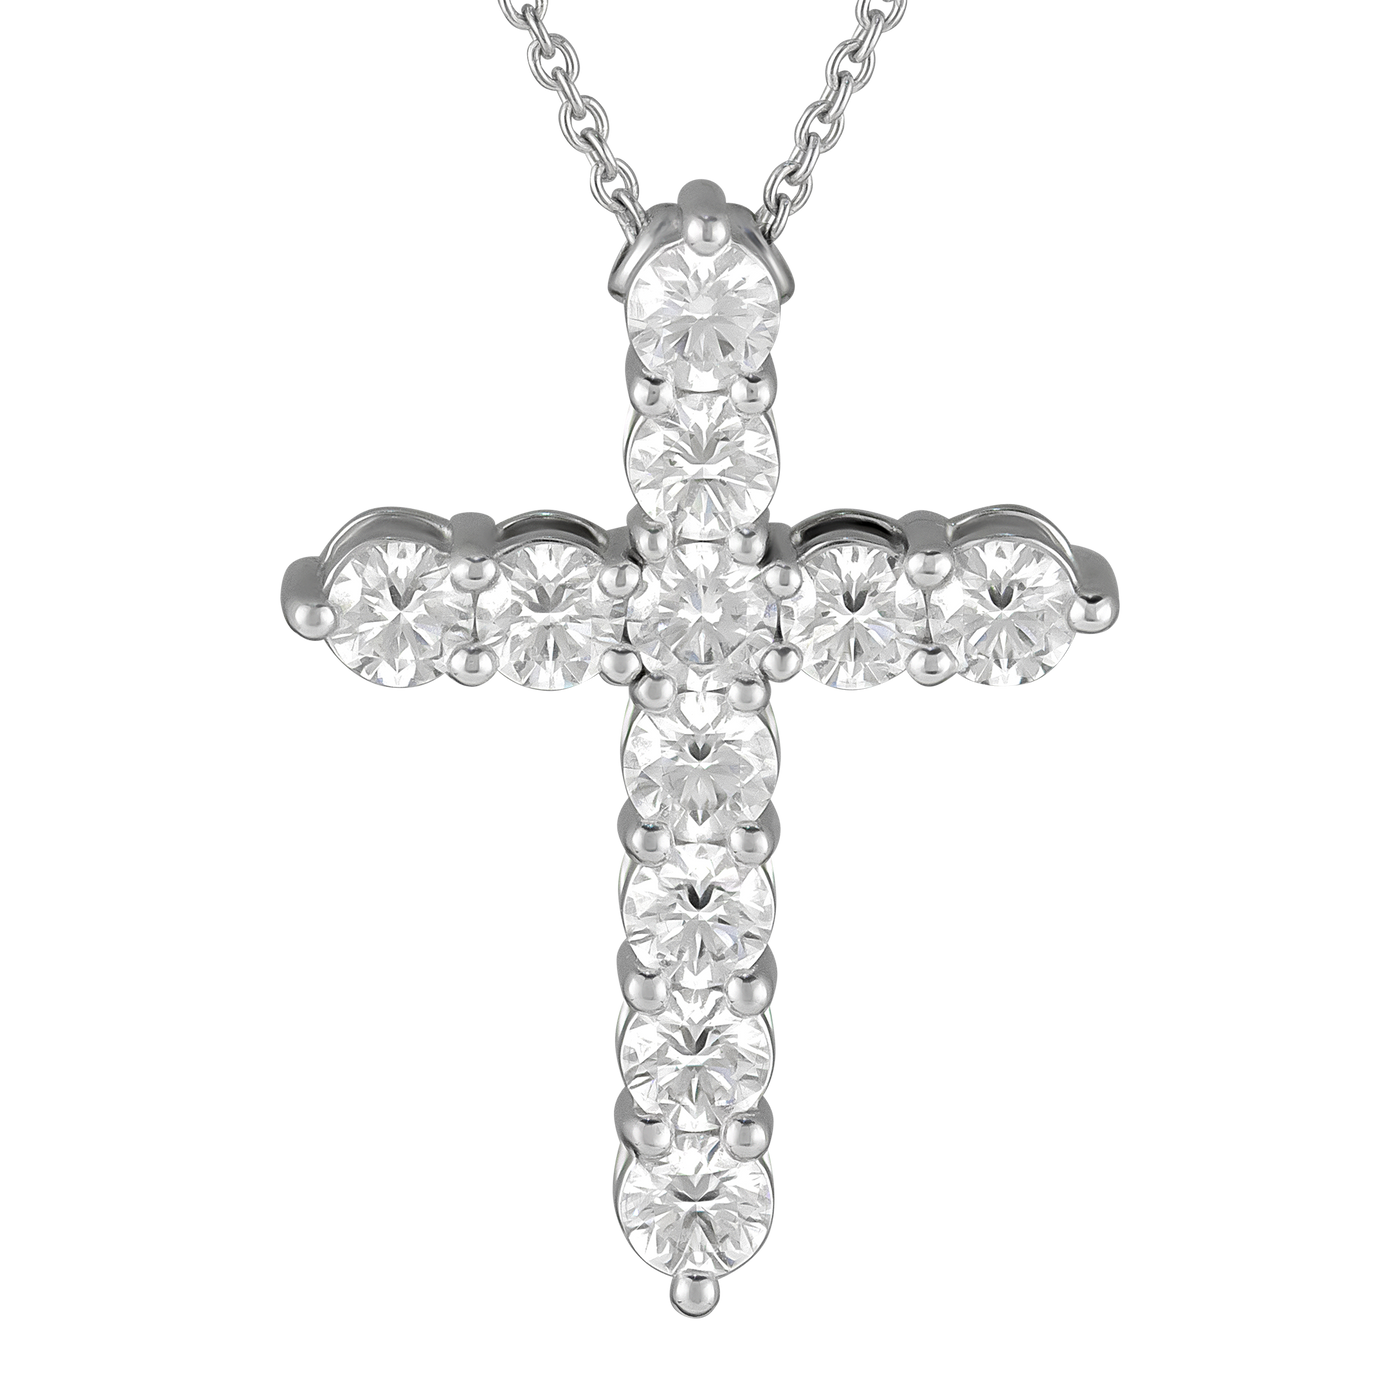 Graff 18K White Gold Diamond Cross Pendant Necklace